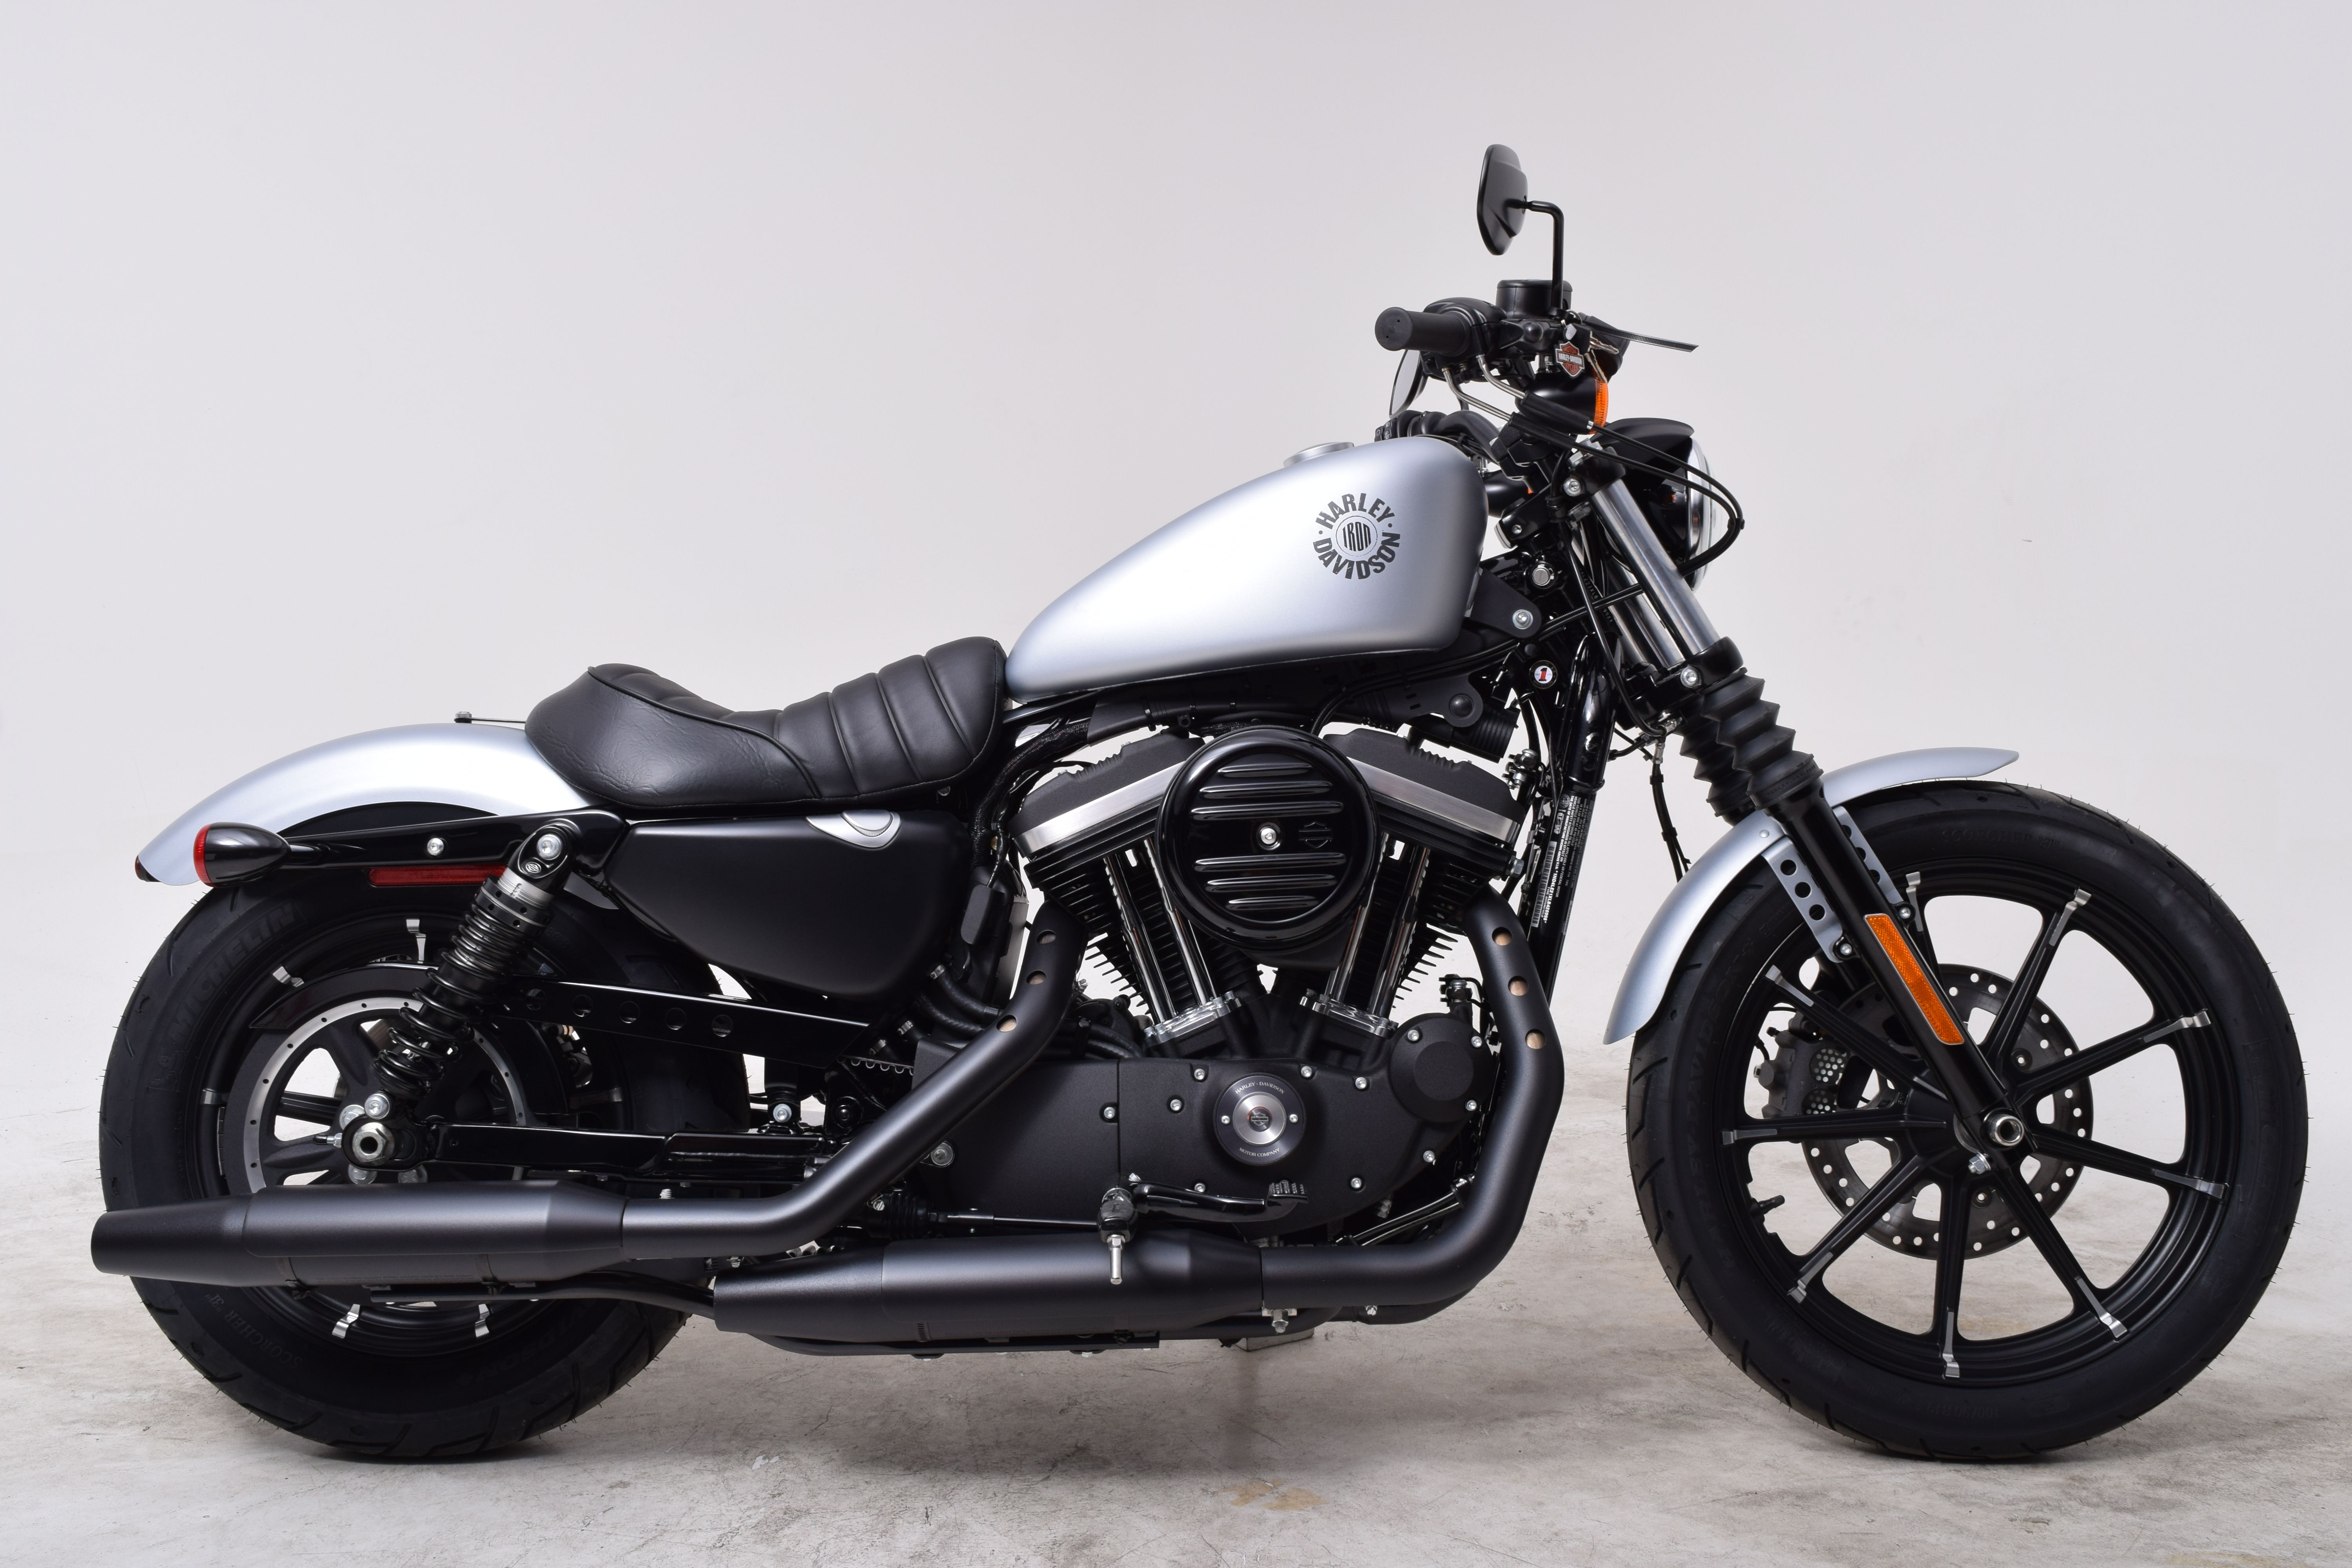 New 2020 Harley-Davidson XL883N Street Iron 883